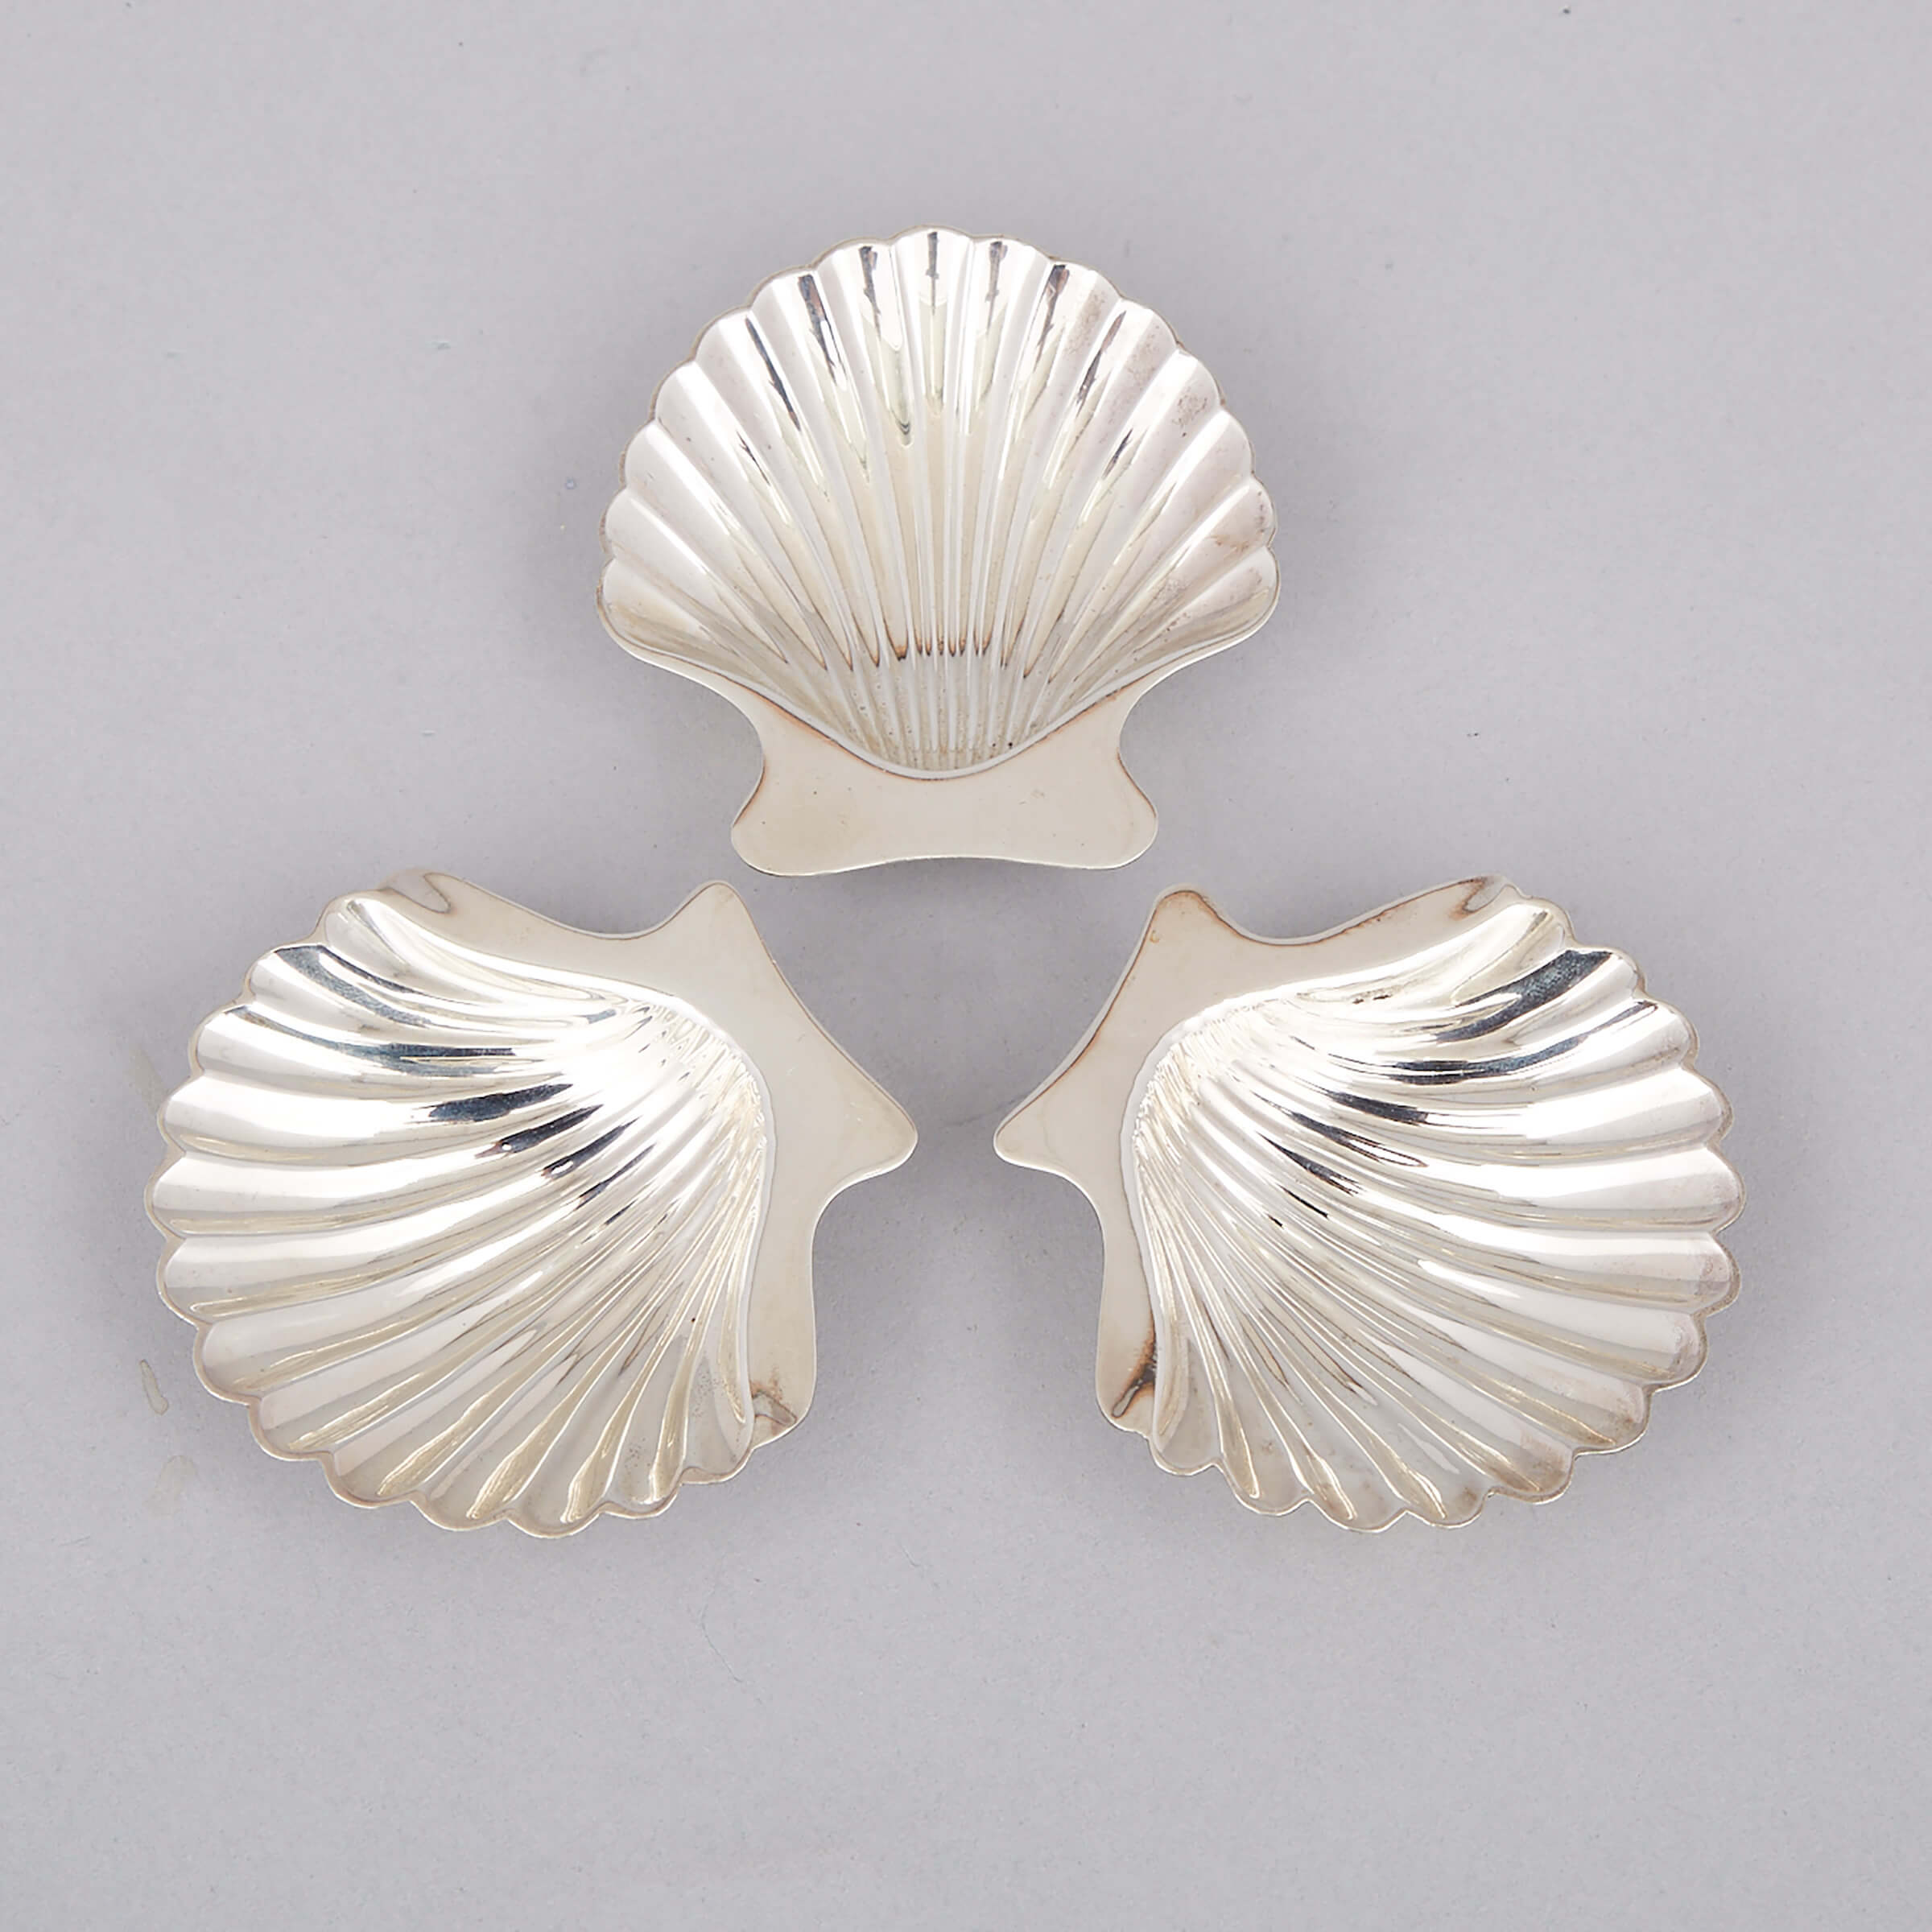 Three American Silver Small Shell Dishes, Tiffany & Co., New York, N.Y., 20th century